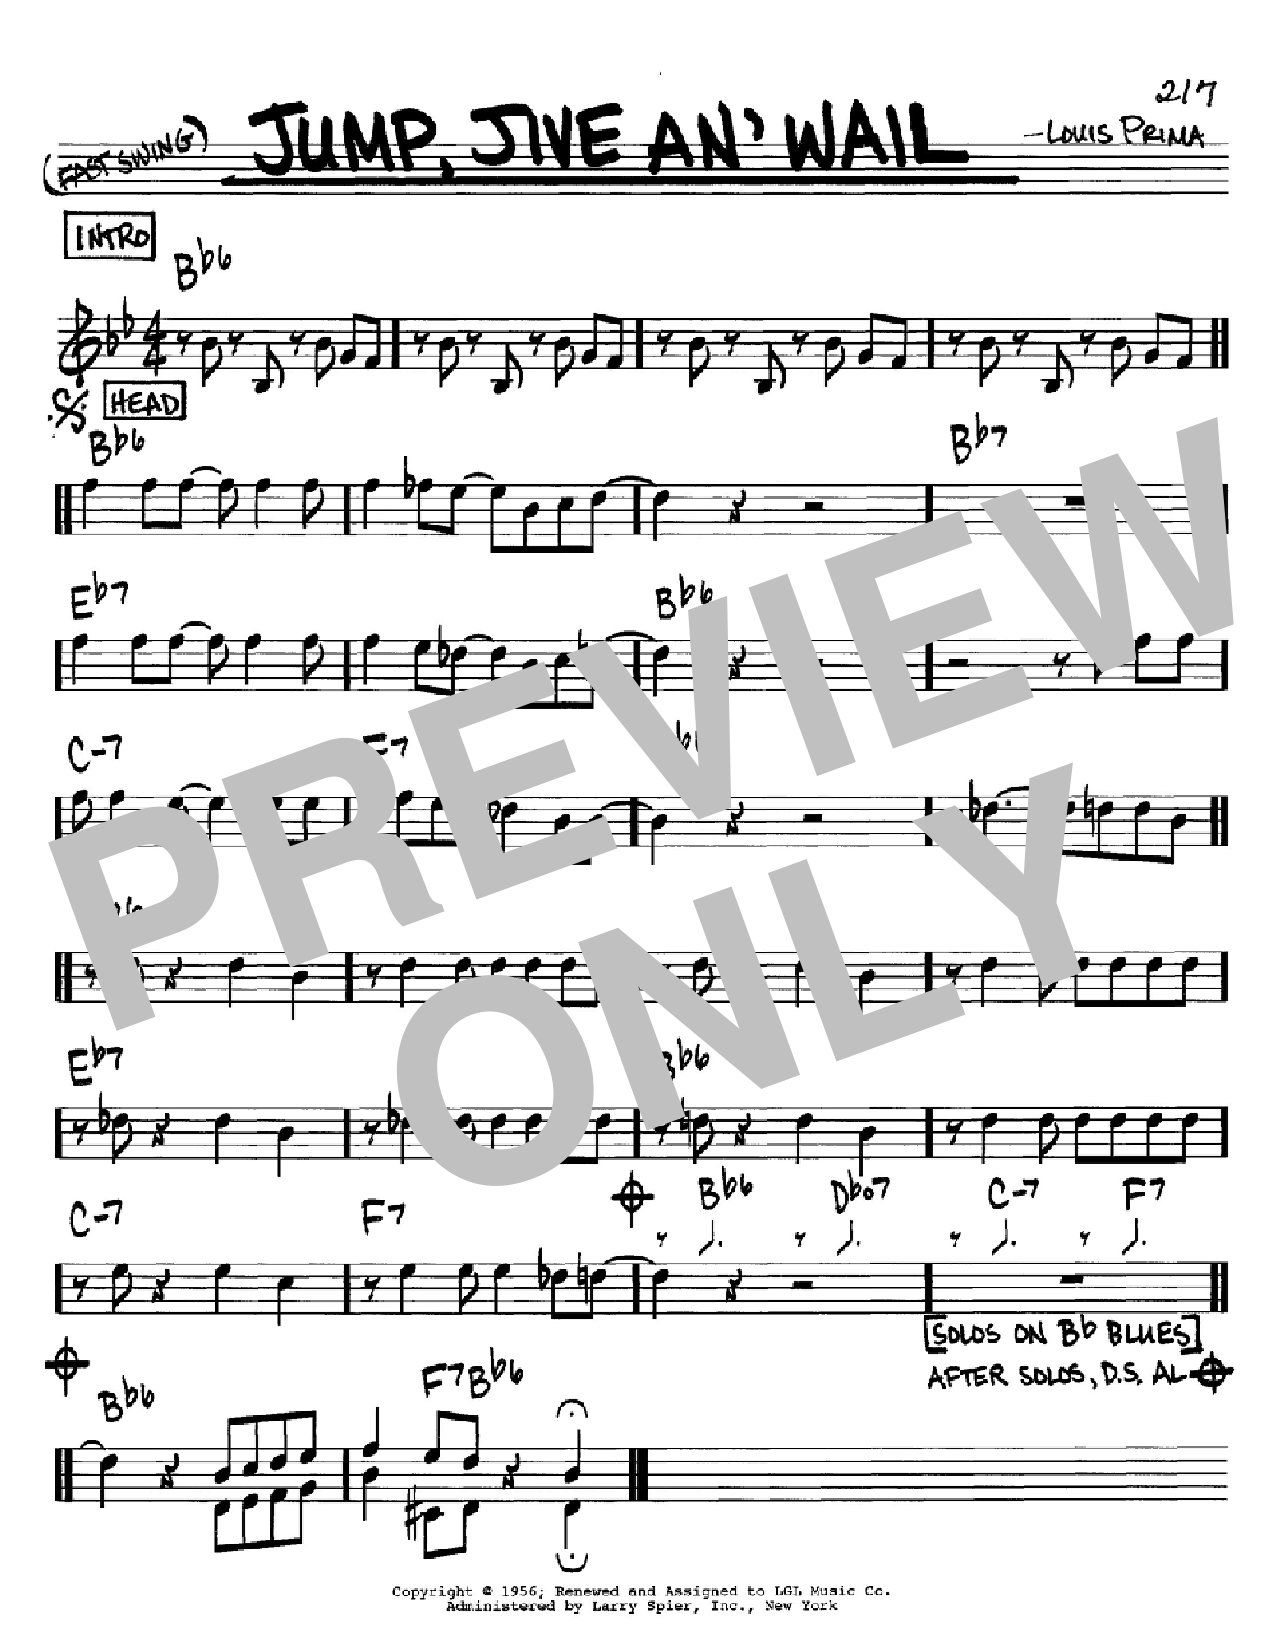 Louis Prima Jump, Jive An' Wail Sheet Music Notes & Chords for Real Book - Melody & Chords - C Instruments - Download or Print PDF